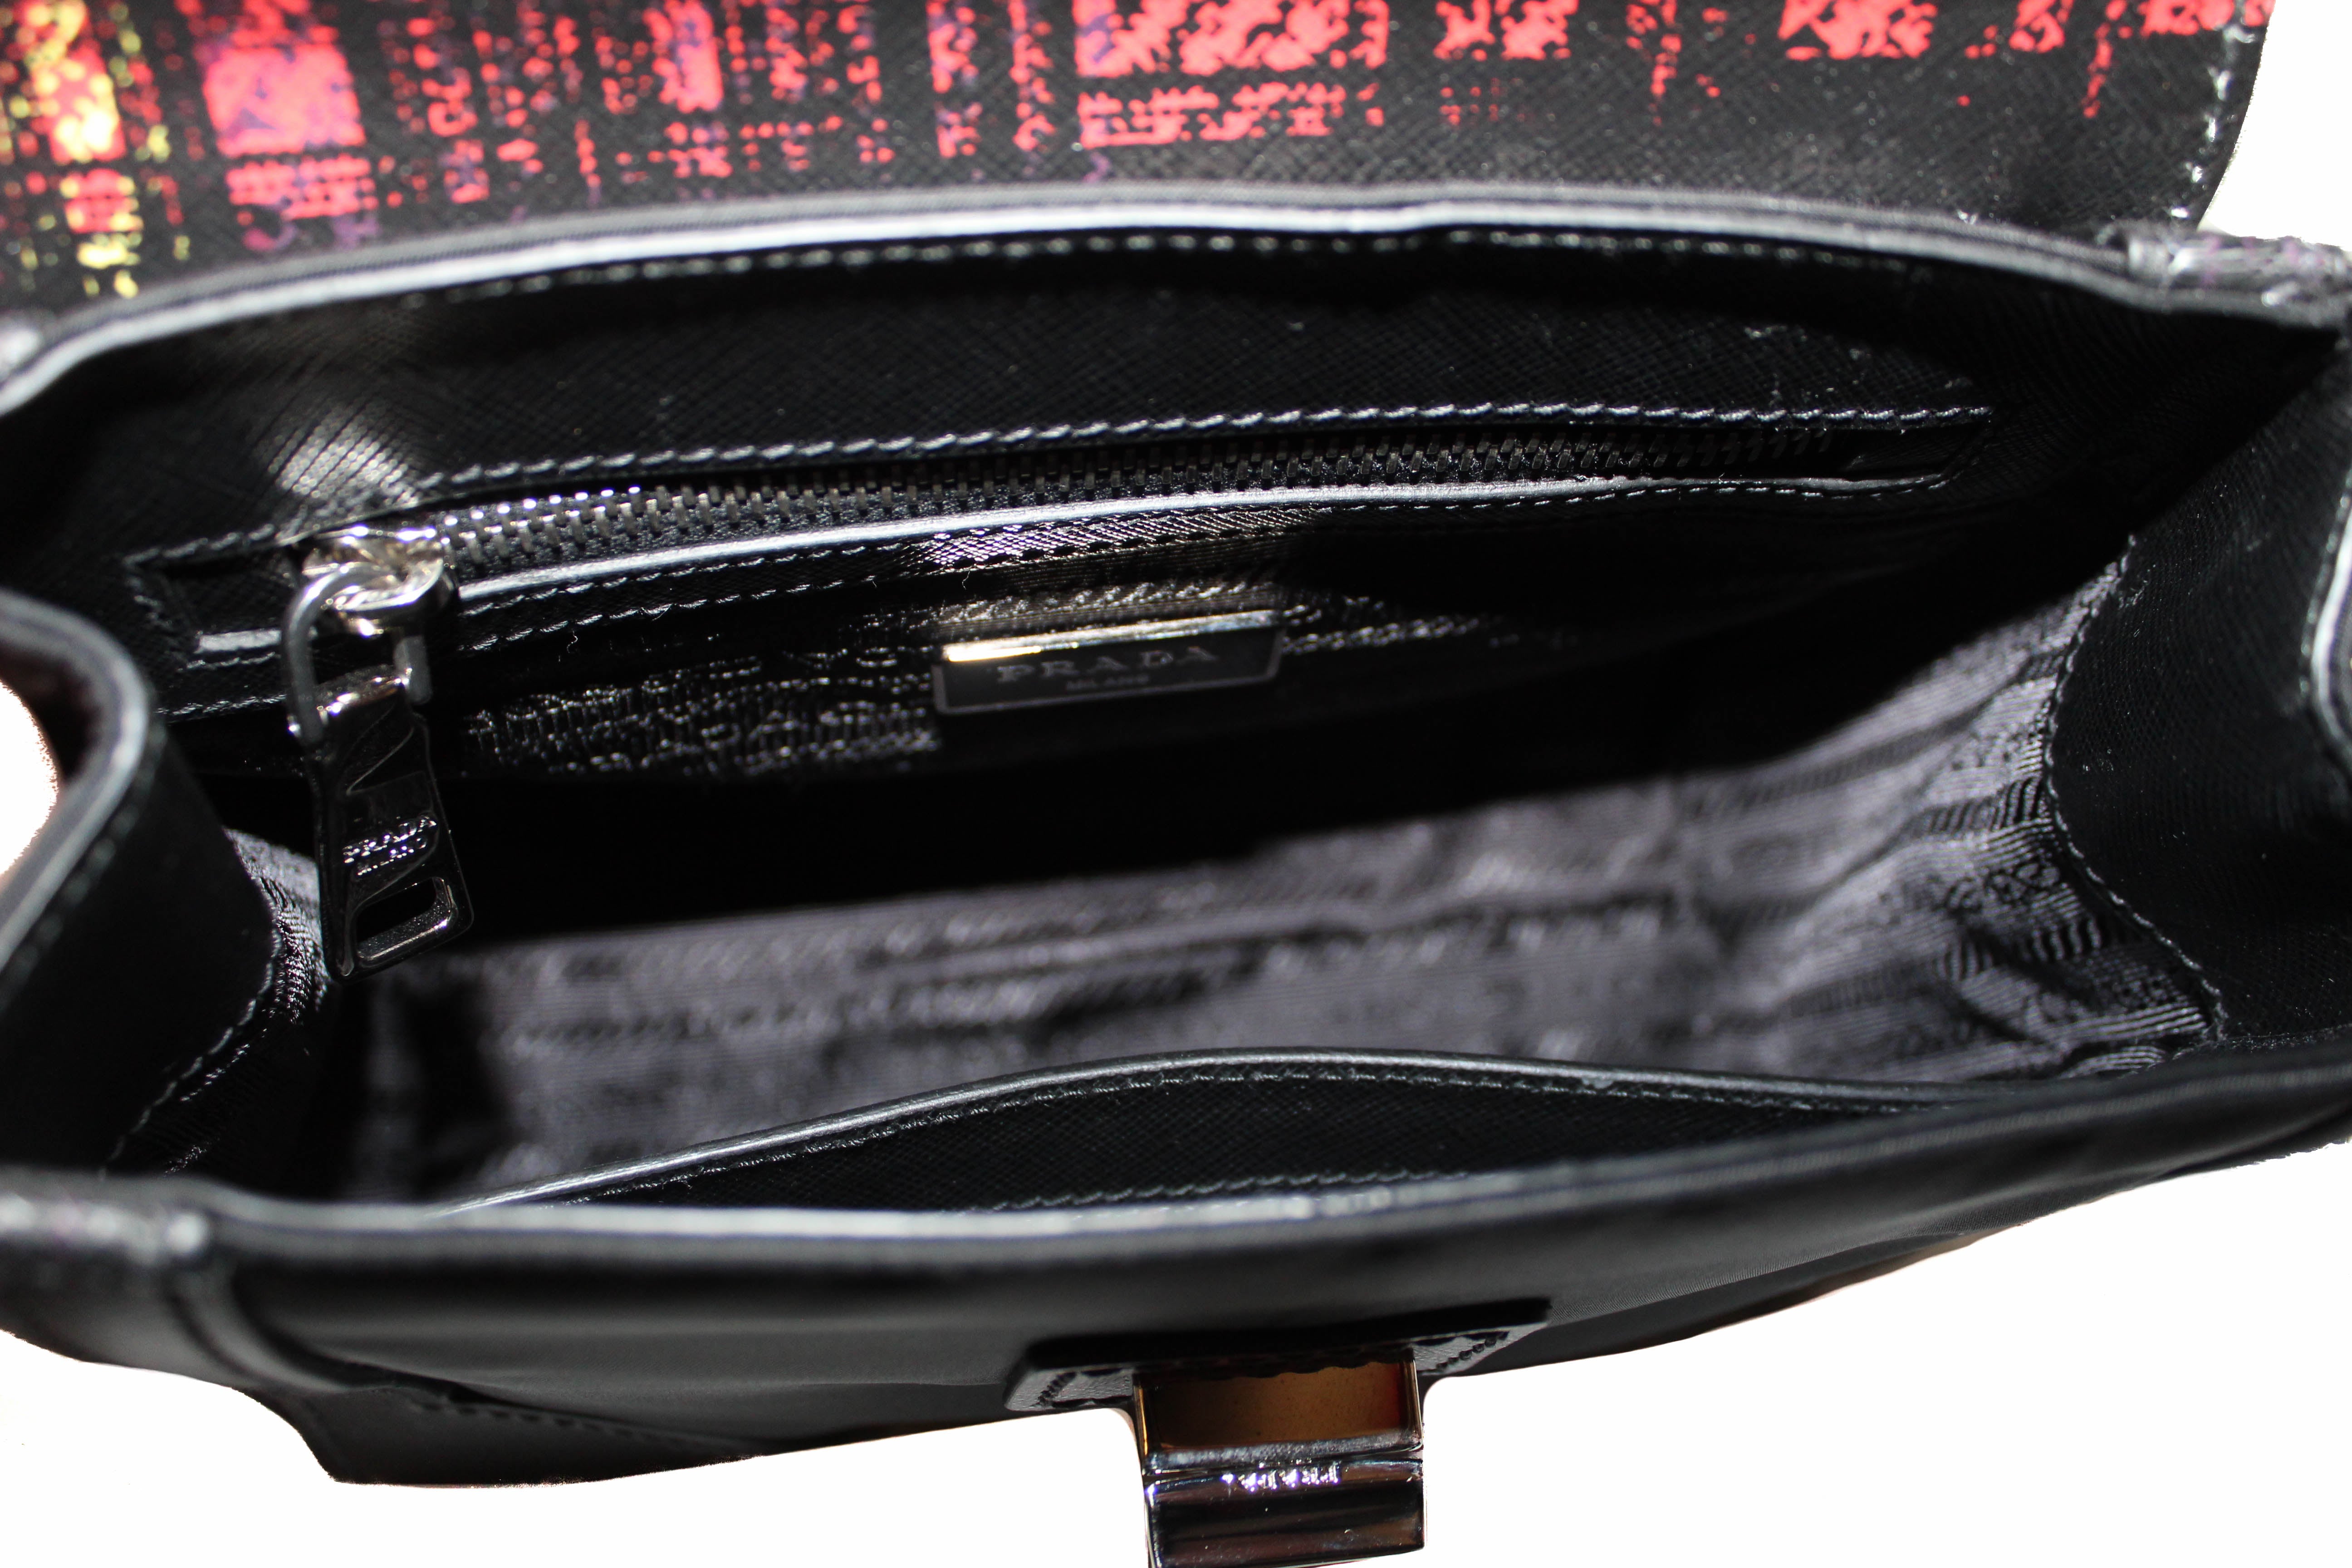 PRADA: shoulder bag in genuine saffiano leather - Black